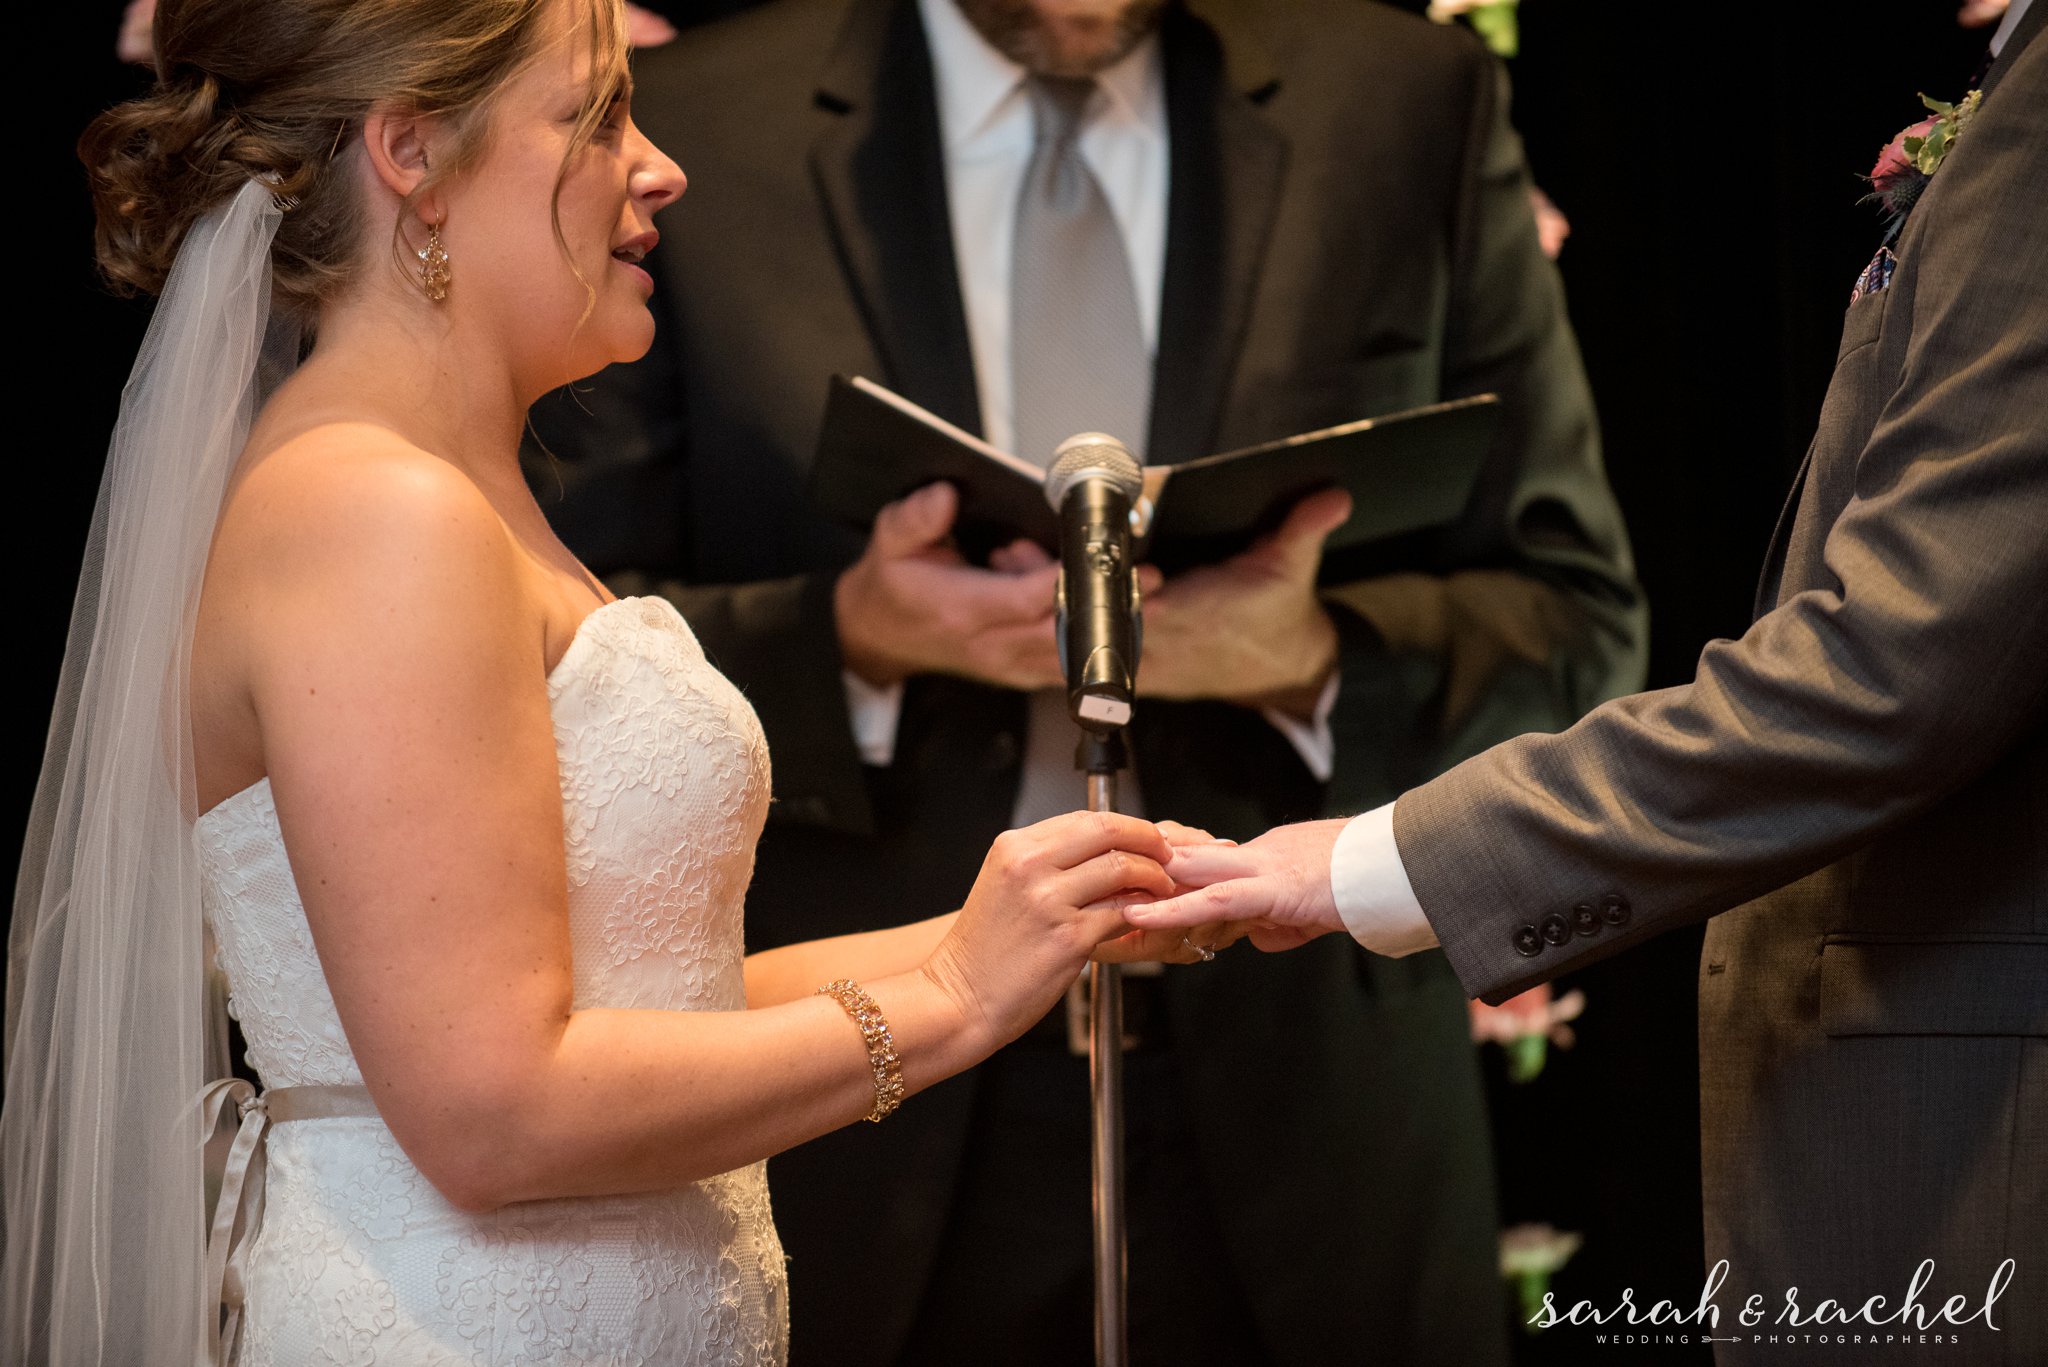 Dearborn Inn Wedding | Detroit Michigan | Sarah and Rachel Wedding Photographers